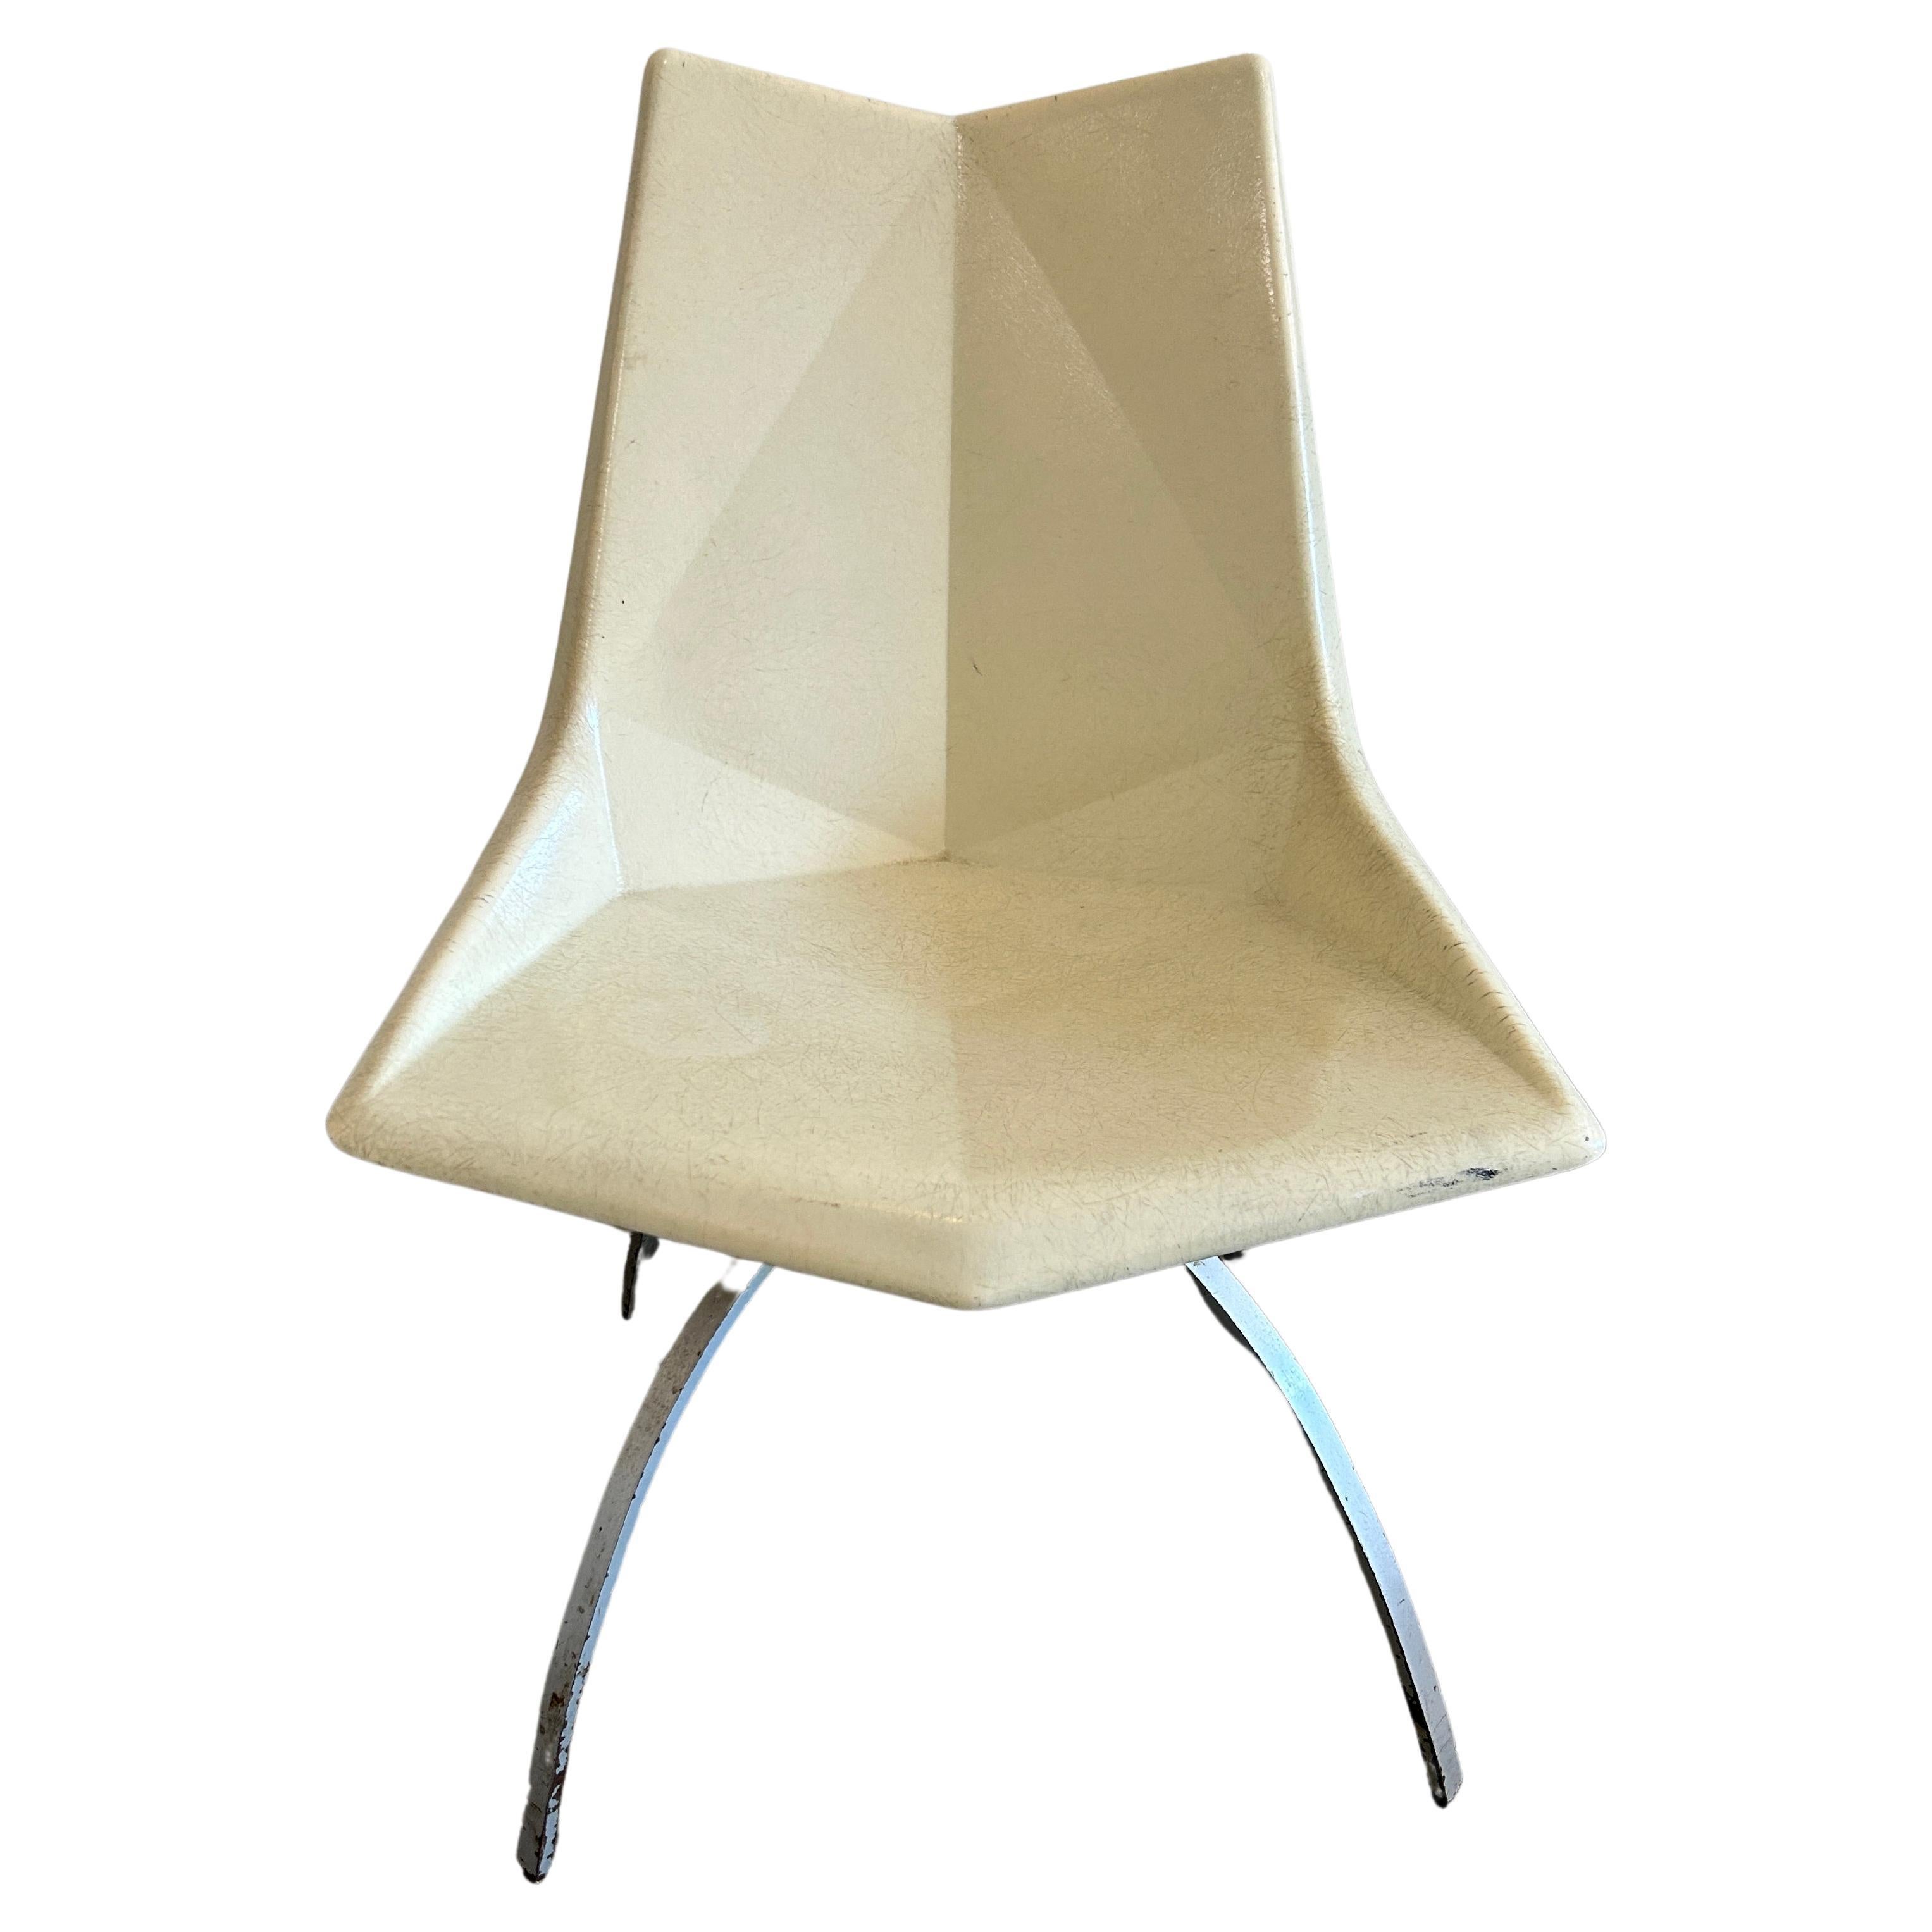  Original Midcentury white Paul McCobb Origami Fiberglass Chair spider base For Sale